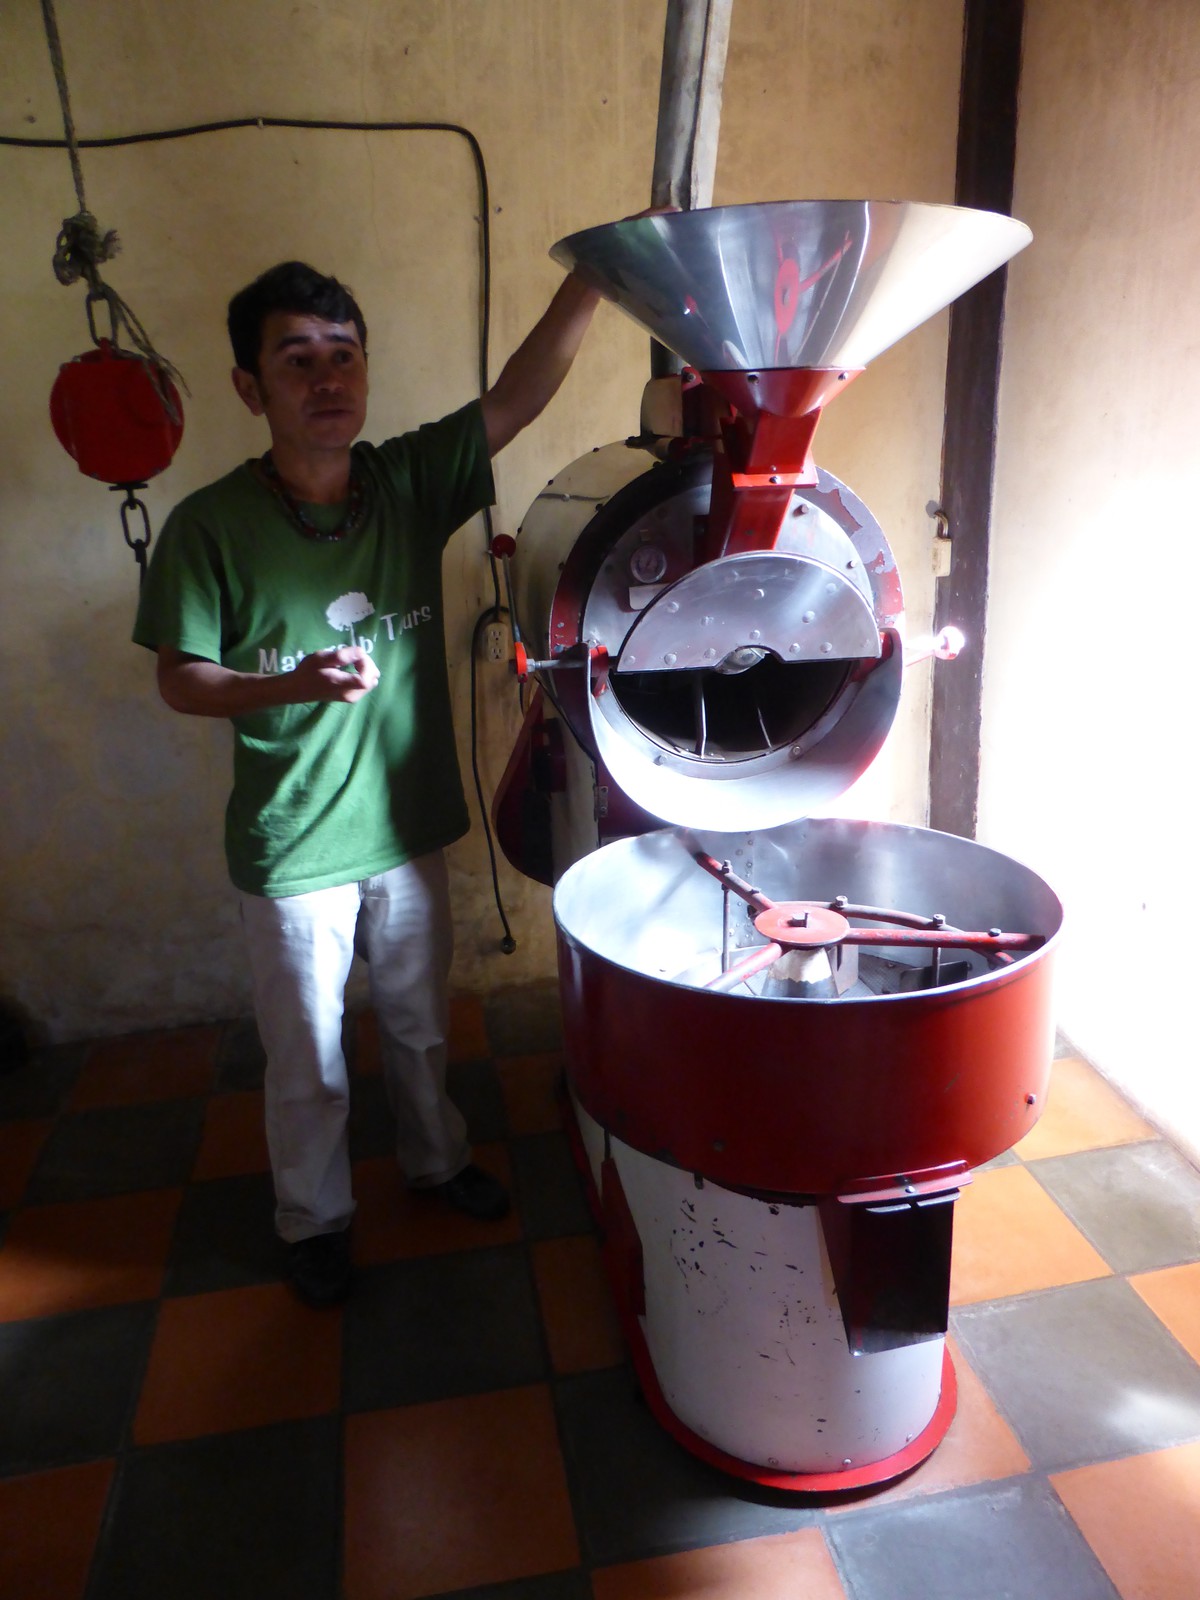 José demonstrating the roasting machine